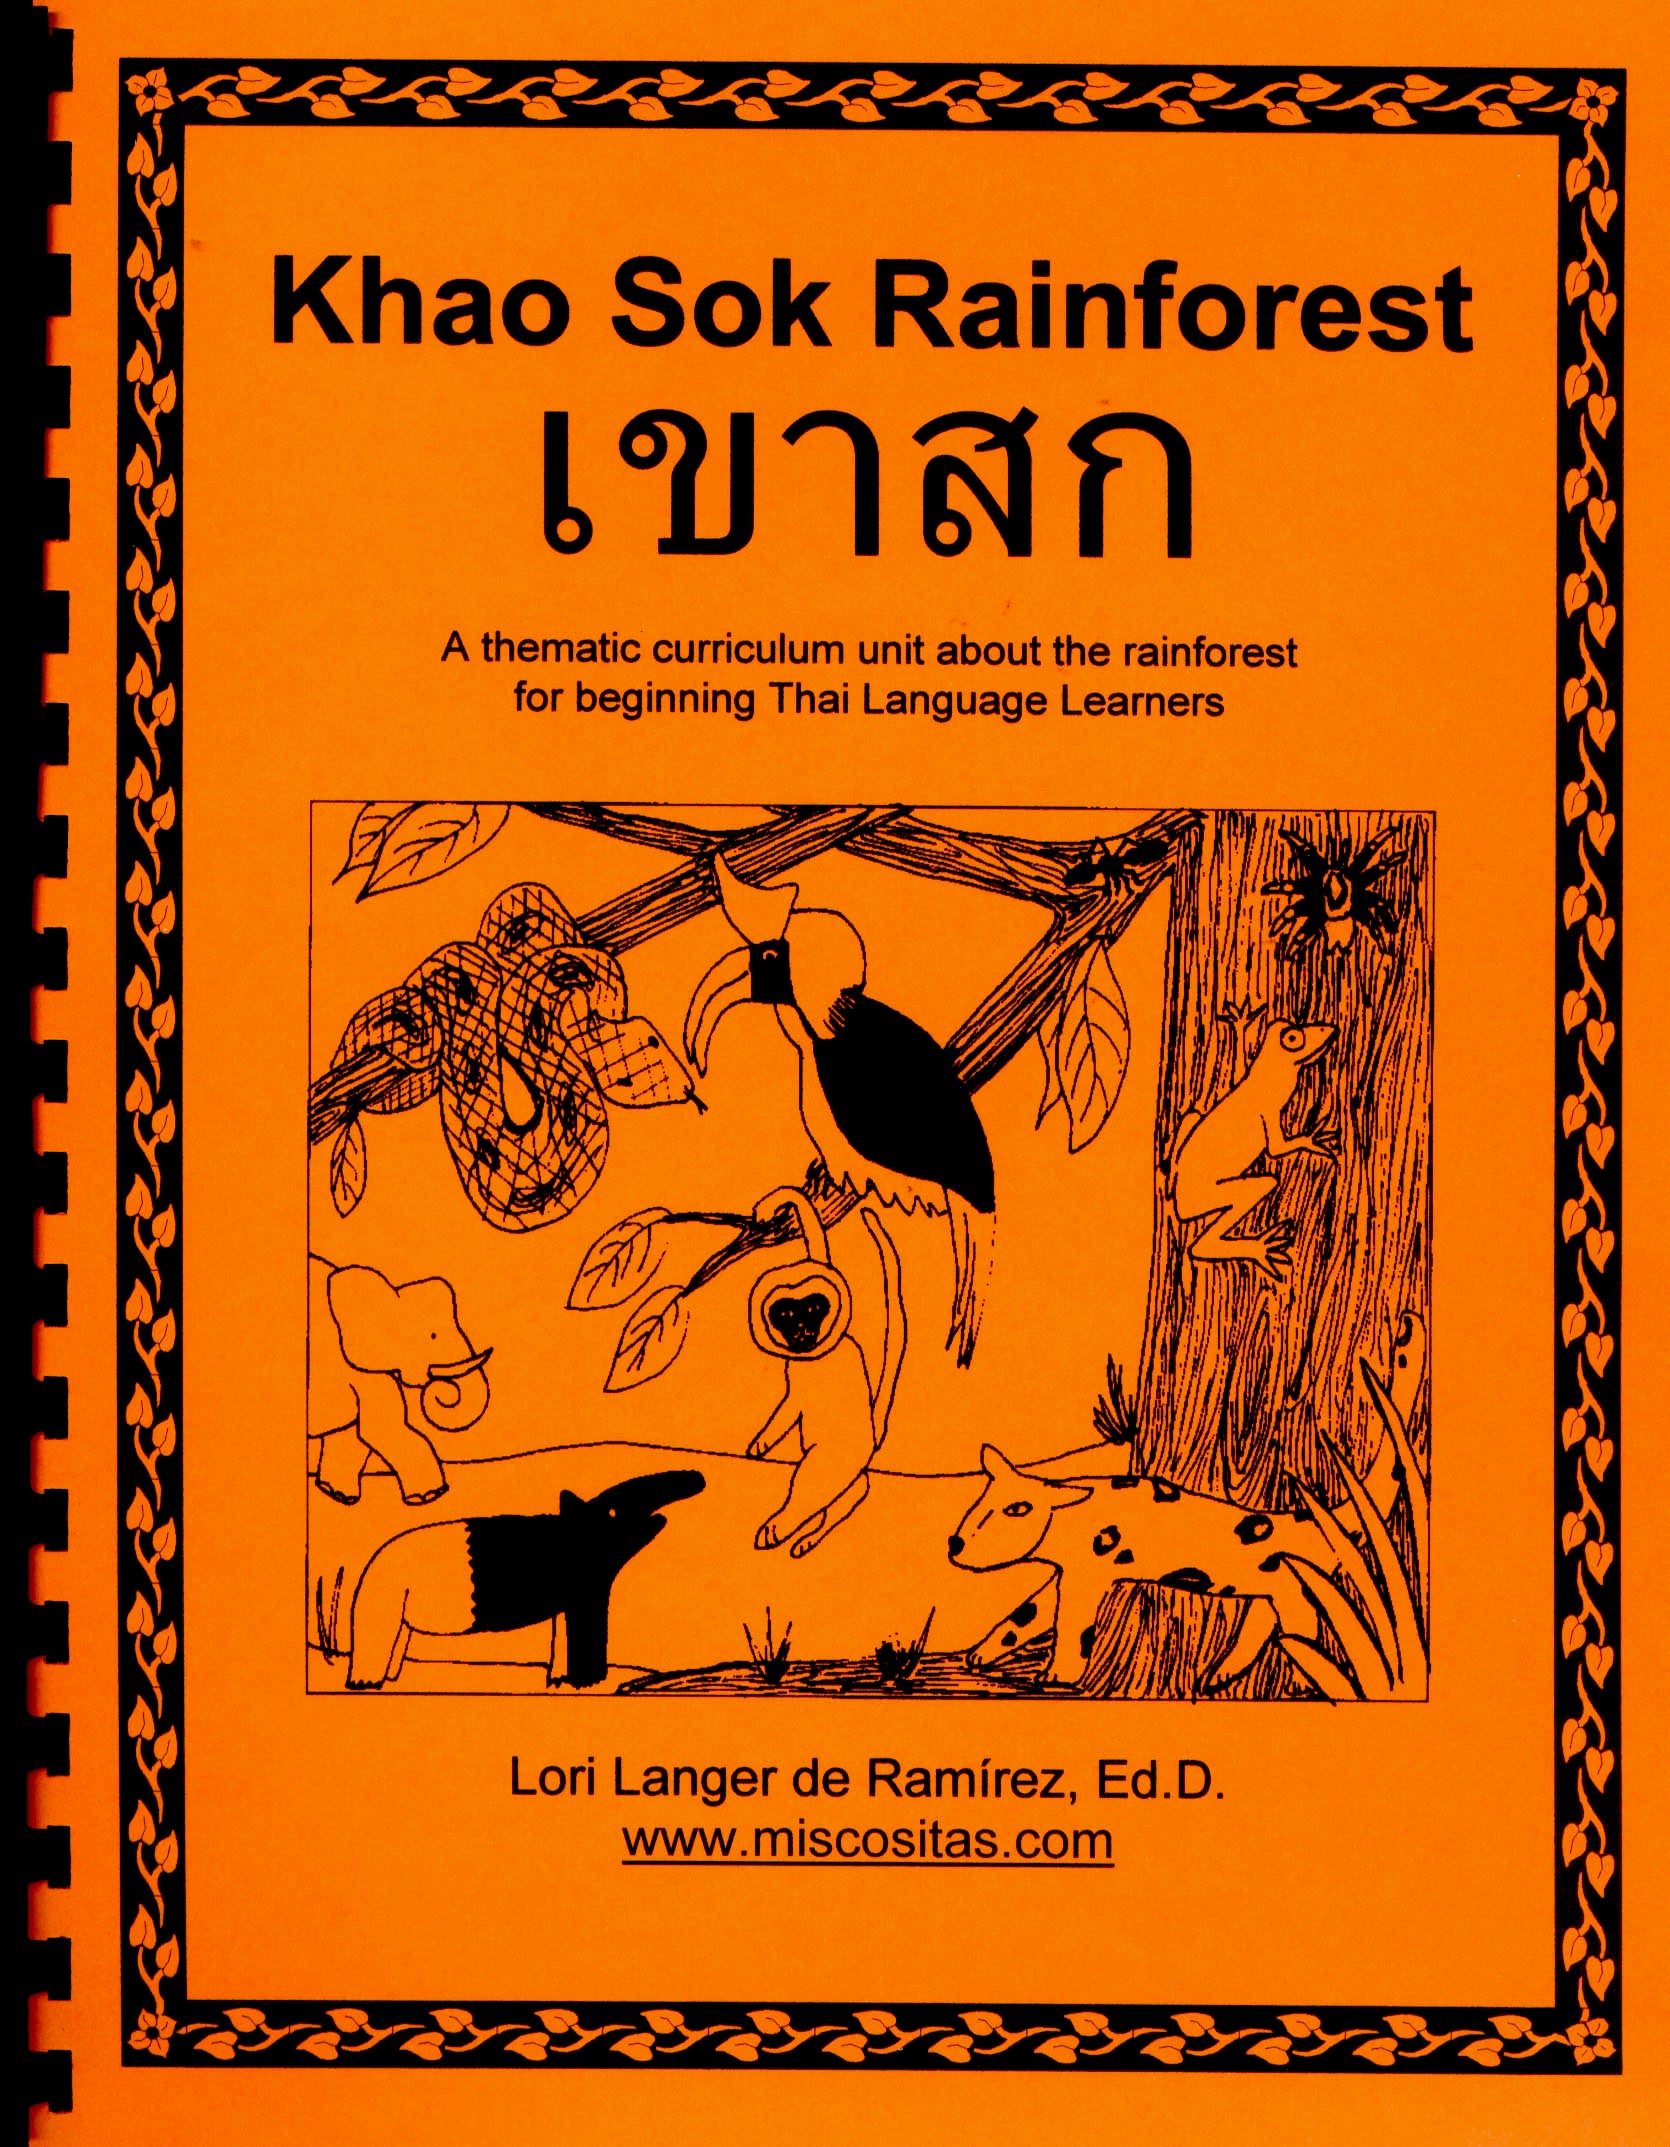 The Khao Sok Rainforest